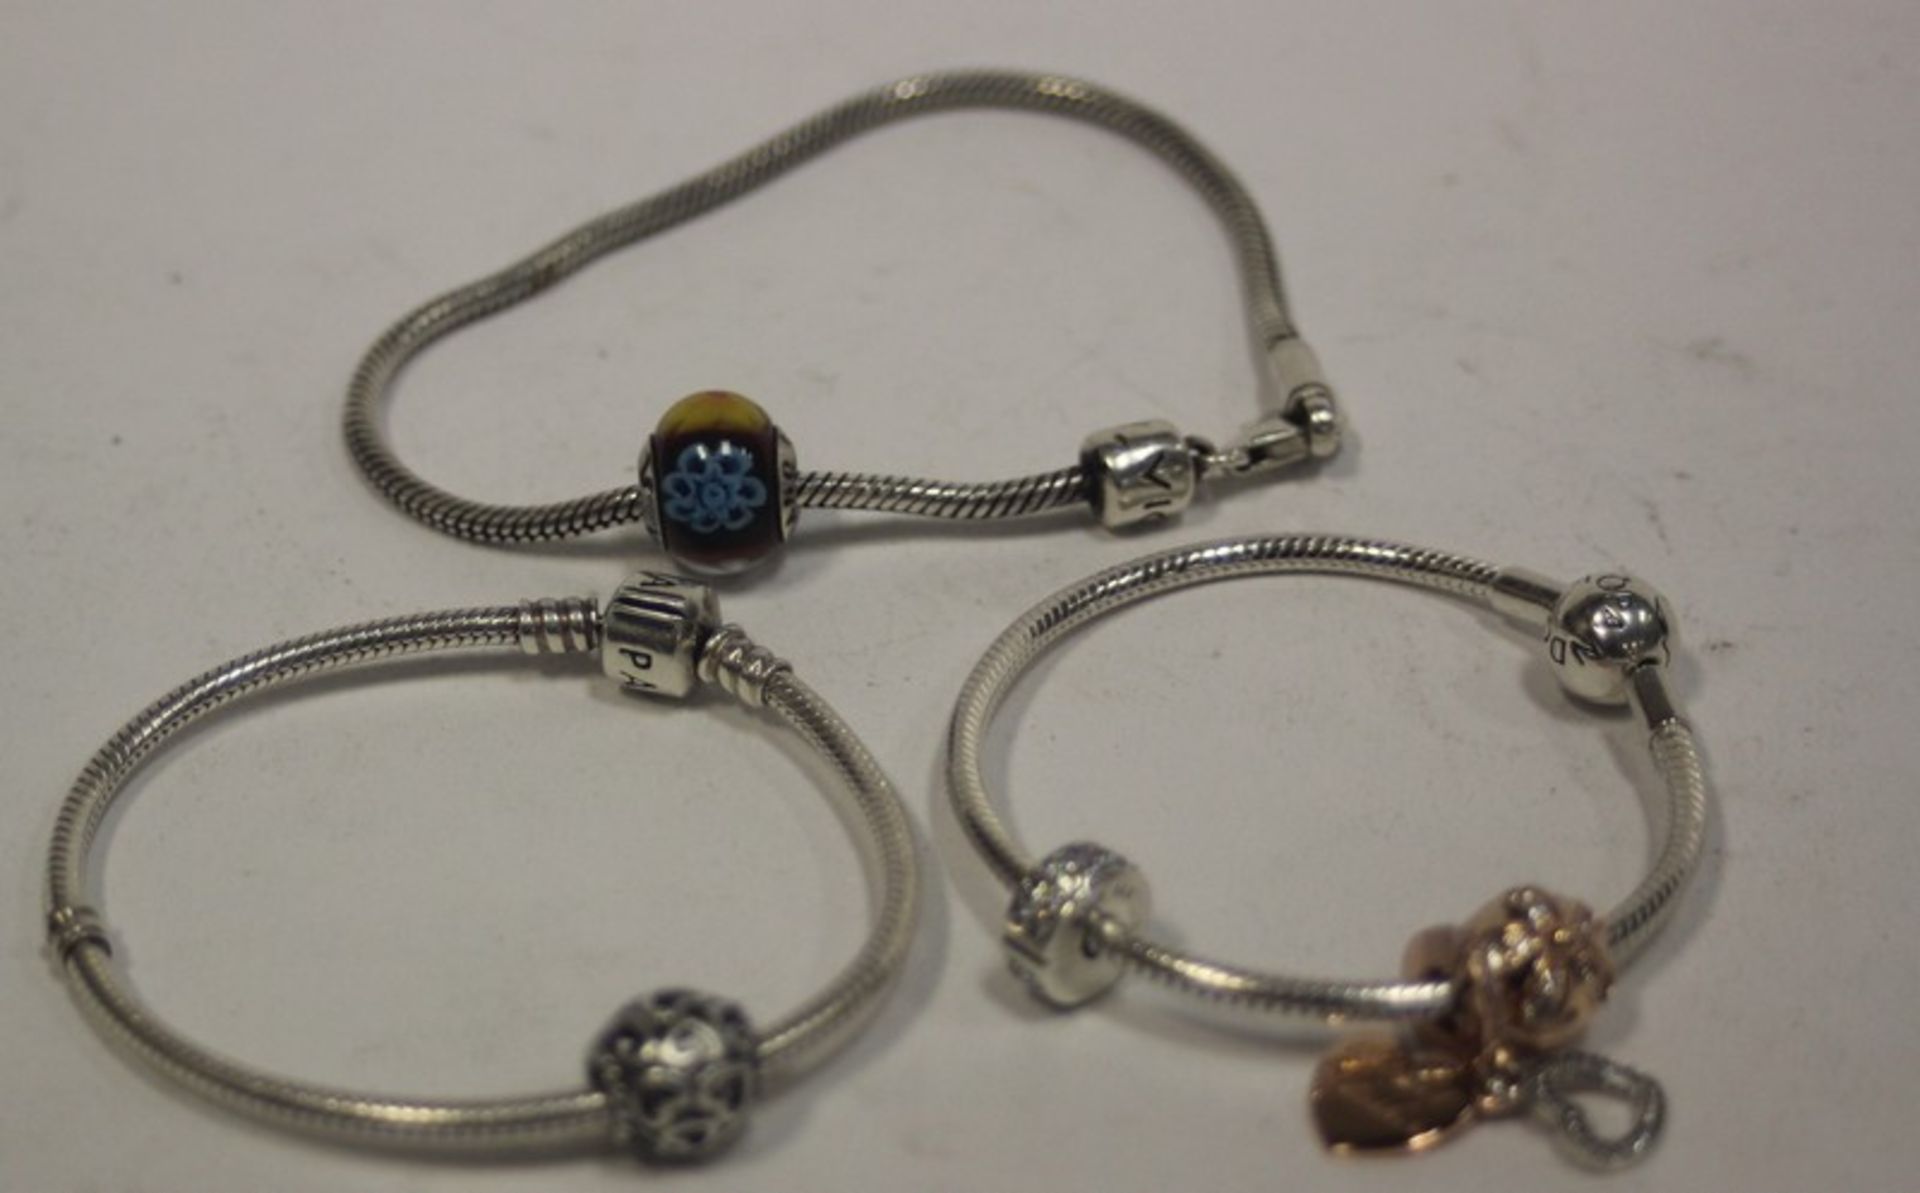 Three Pandora bracelets and five Pandora charms.